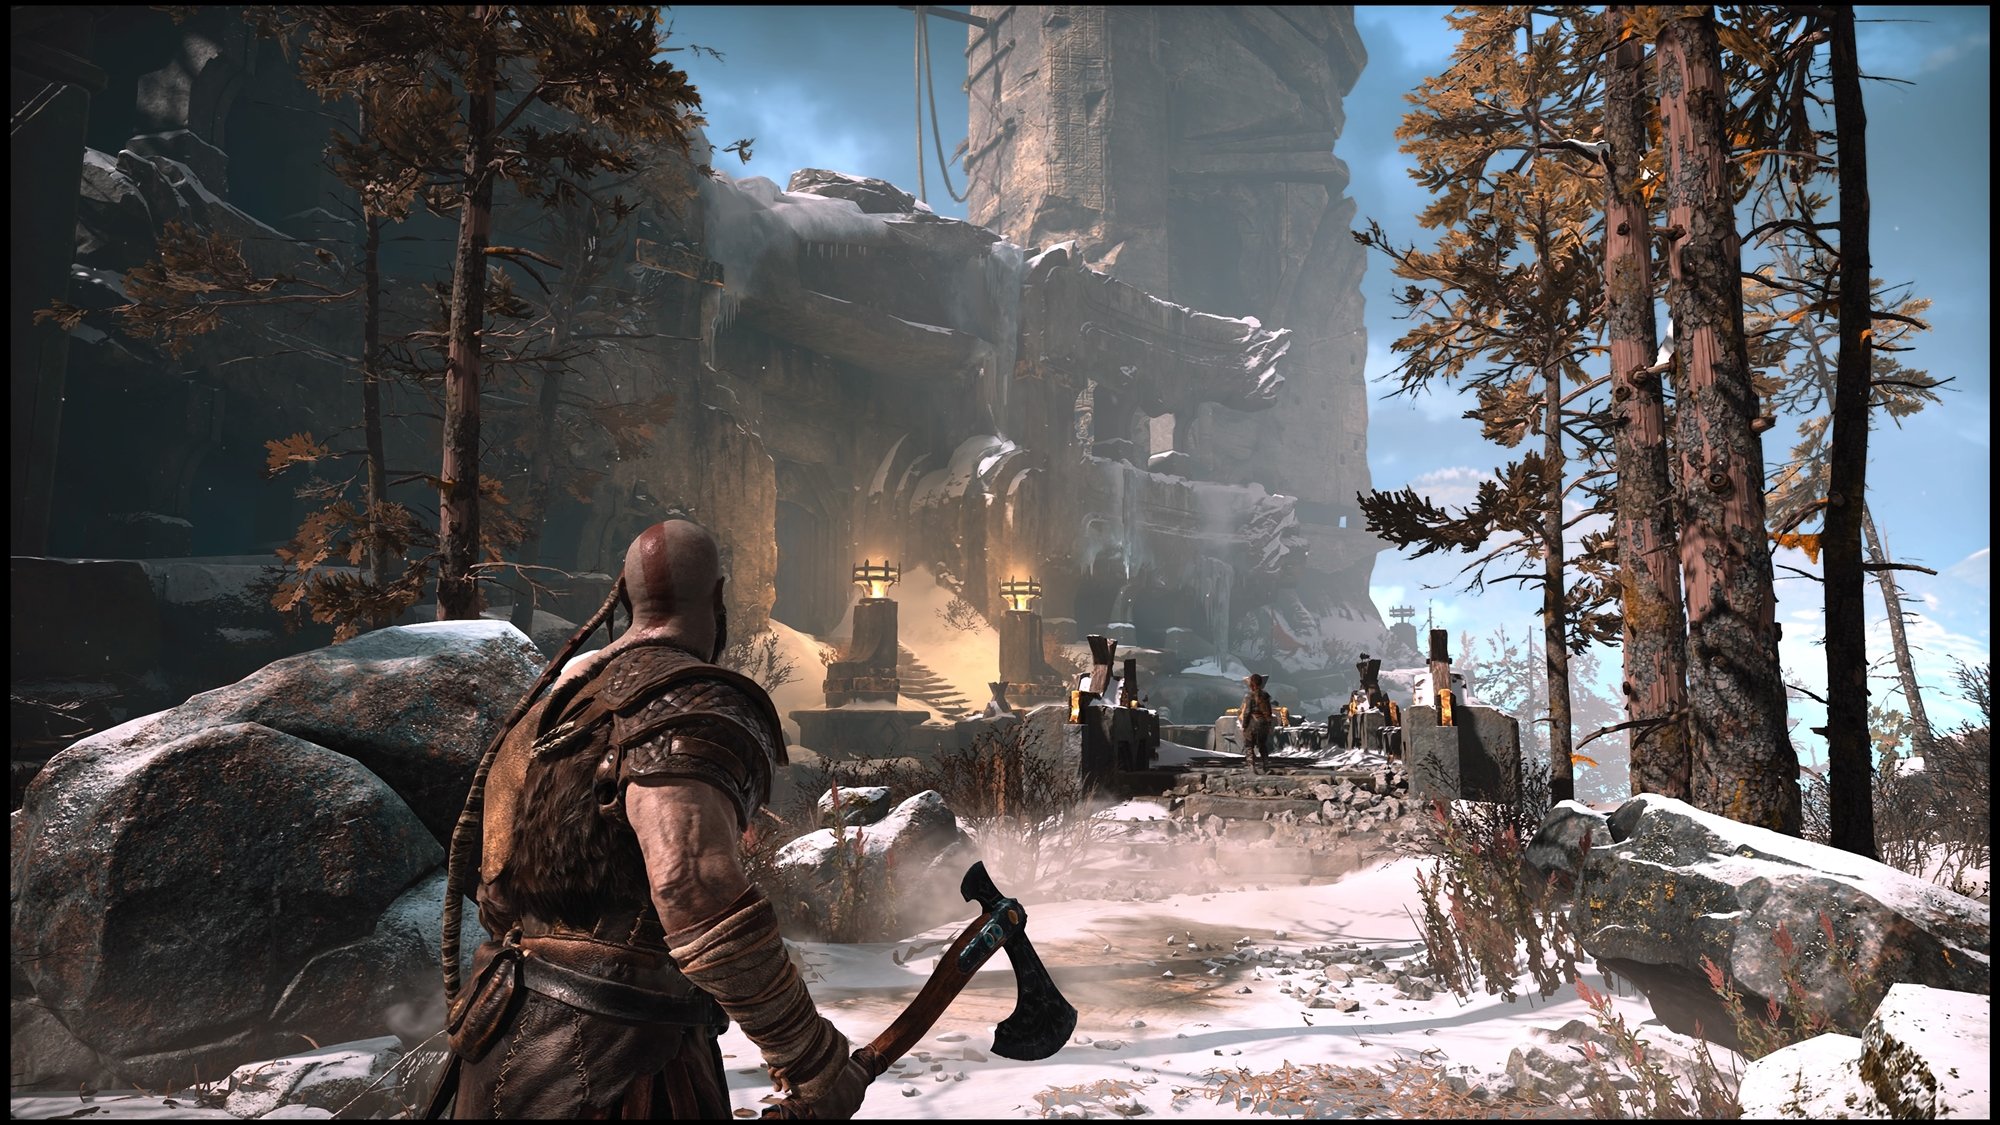 God of War: confira dicas para jogar o game de PS4